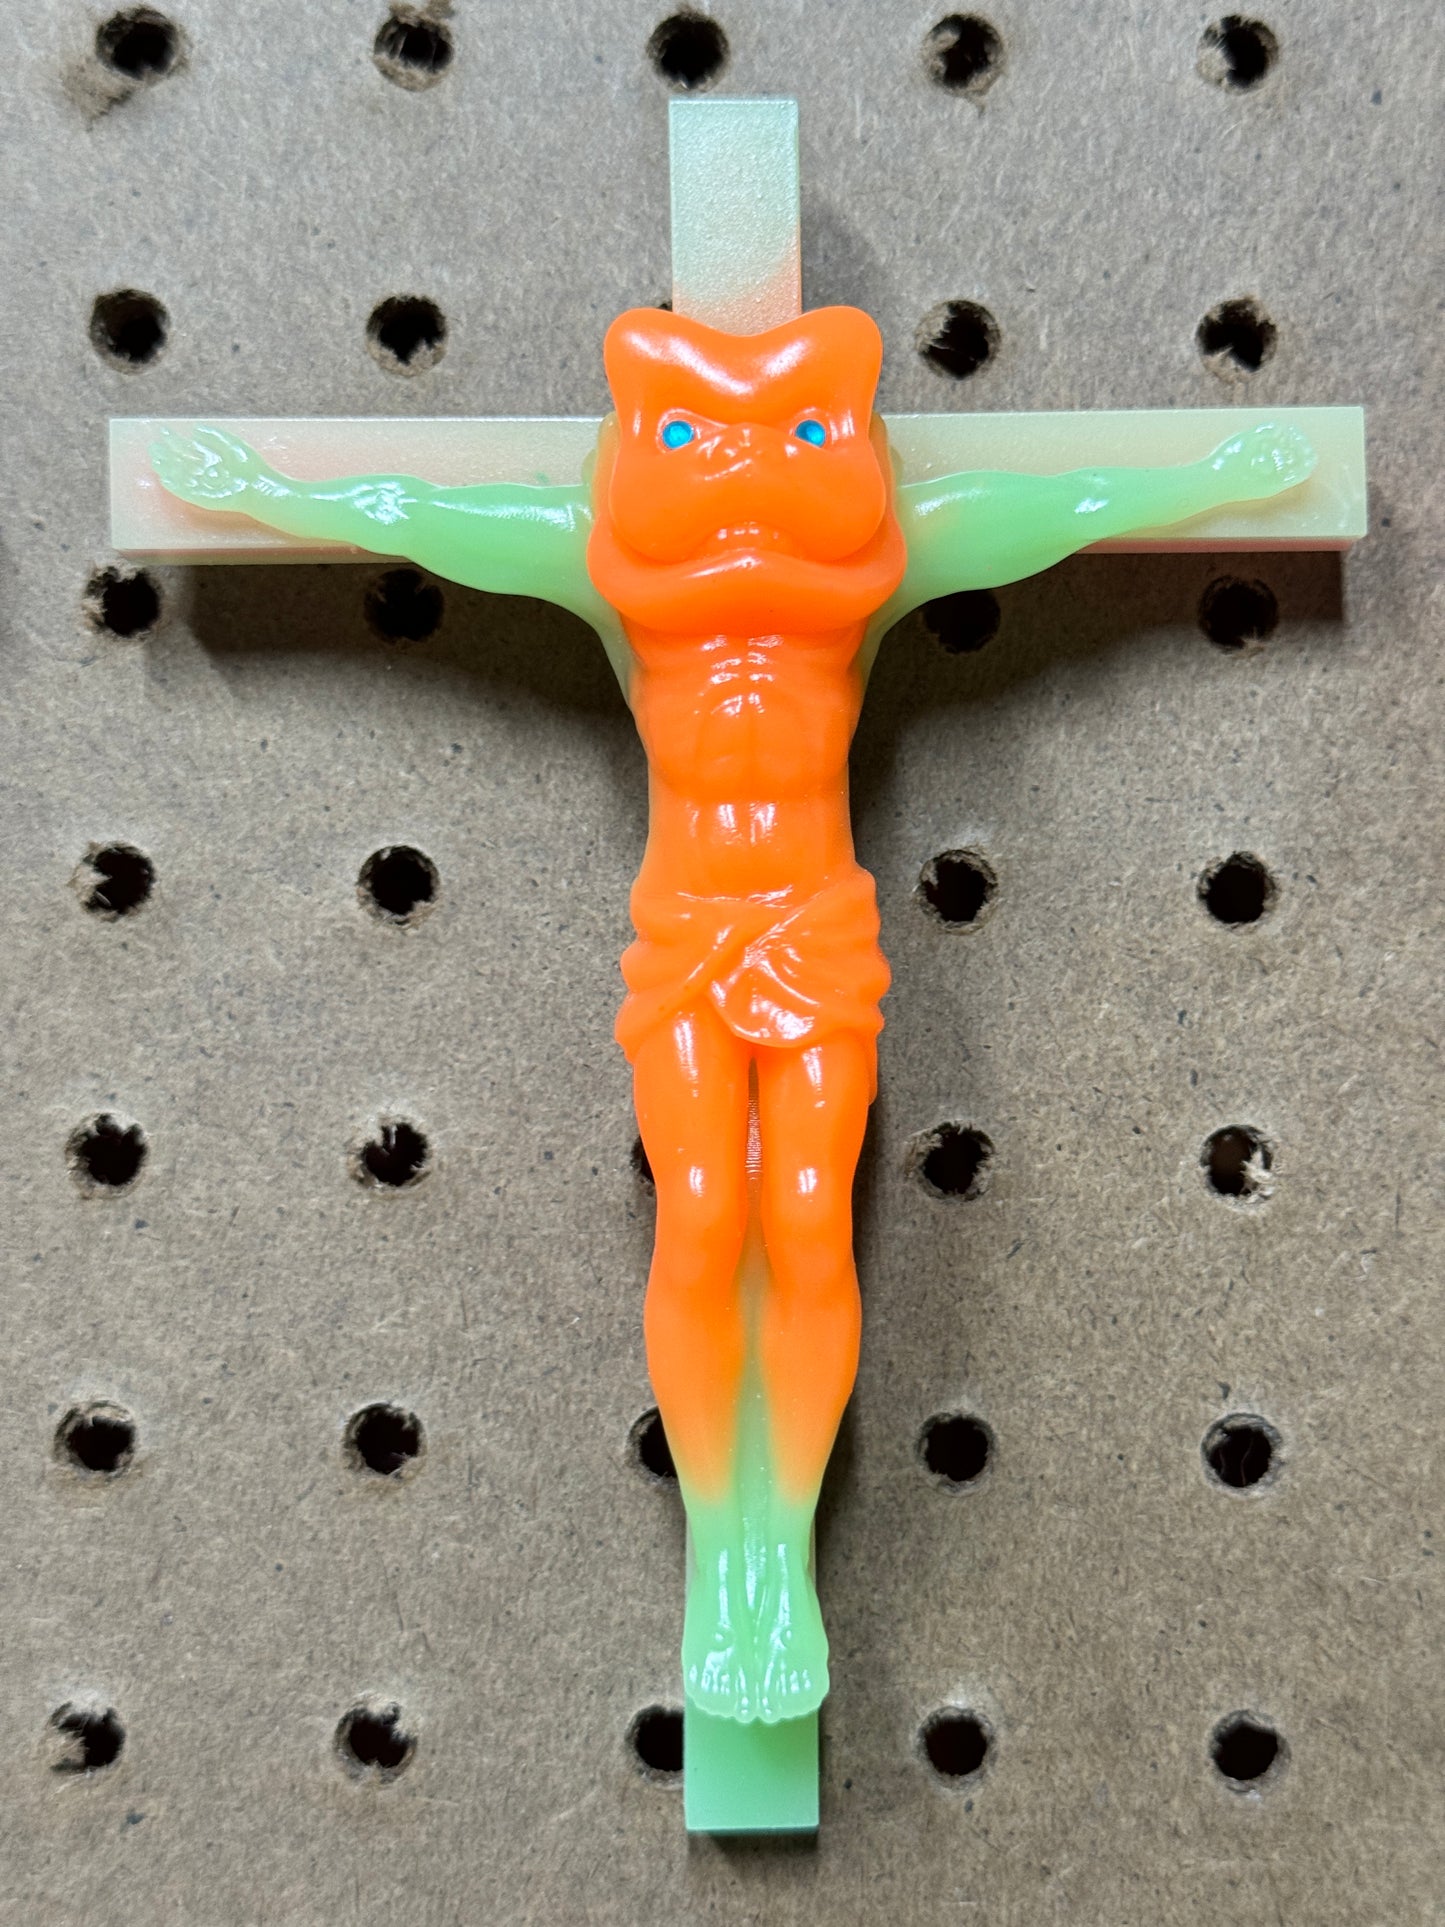 Christ on the Cross but he is a Mecha Ape: Choice